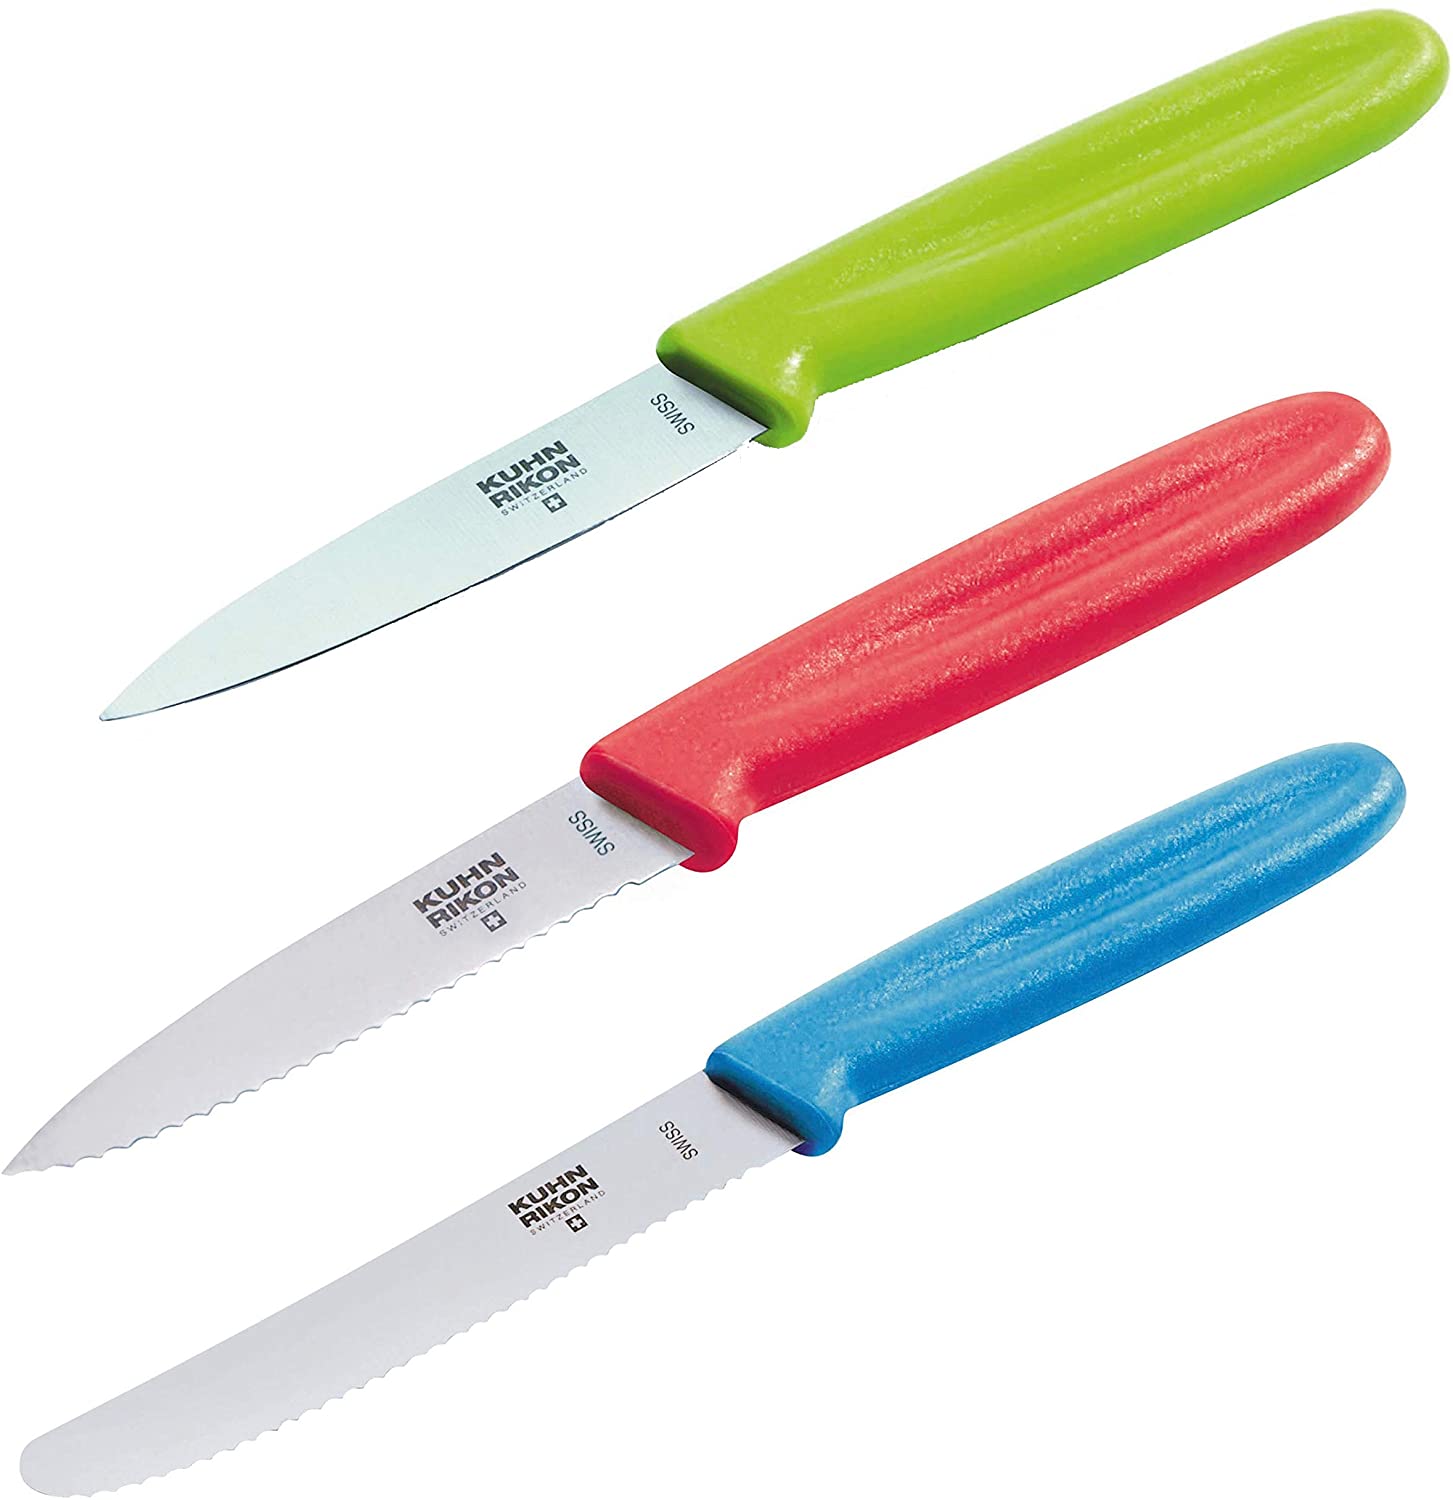 Kuhn Rikon Swiss Knife Set of 3, Red/Blue/Green